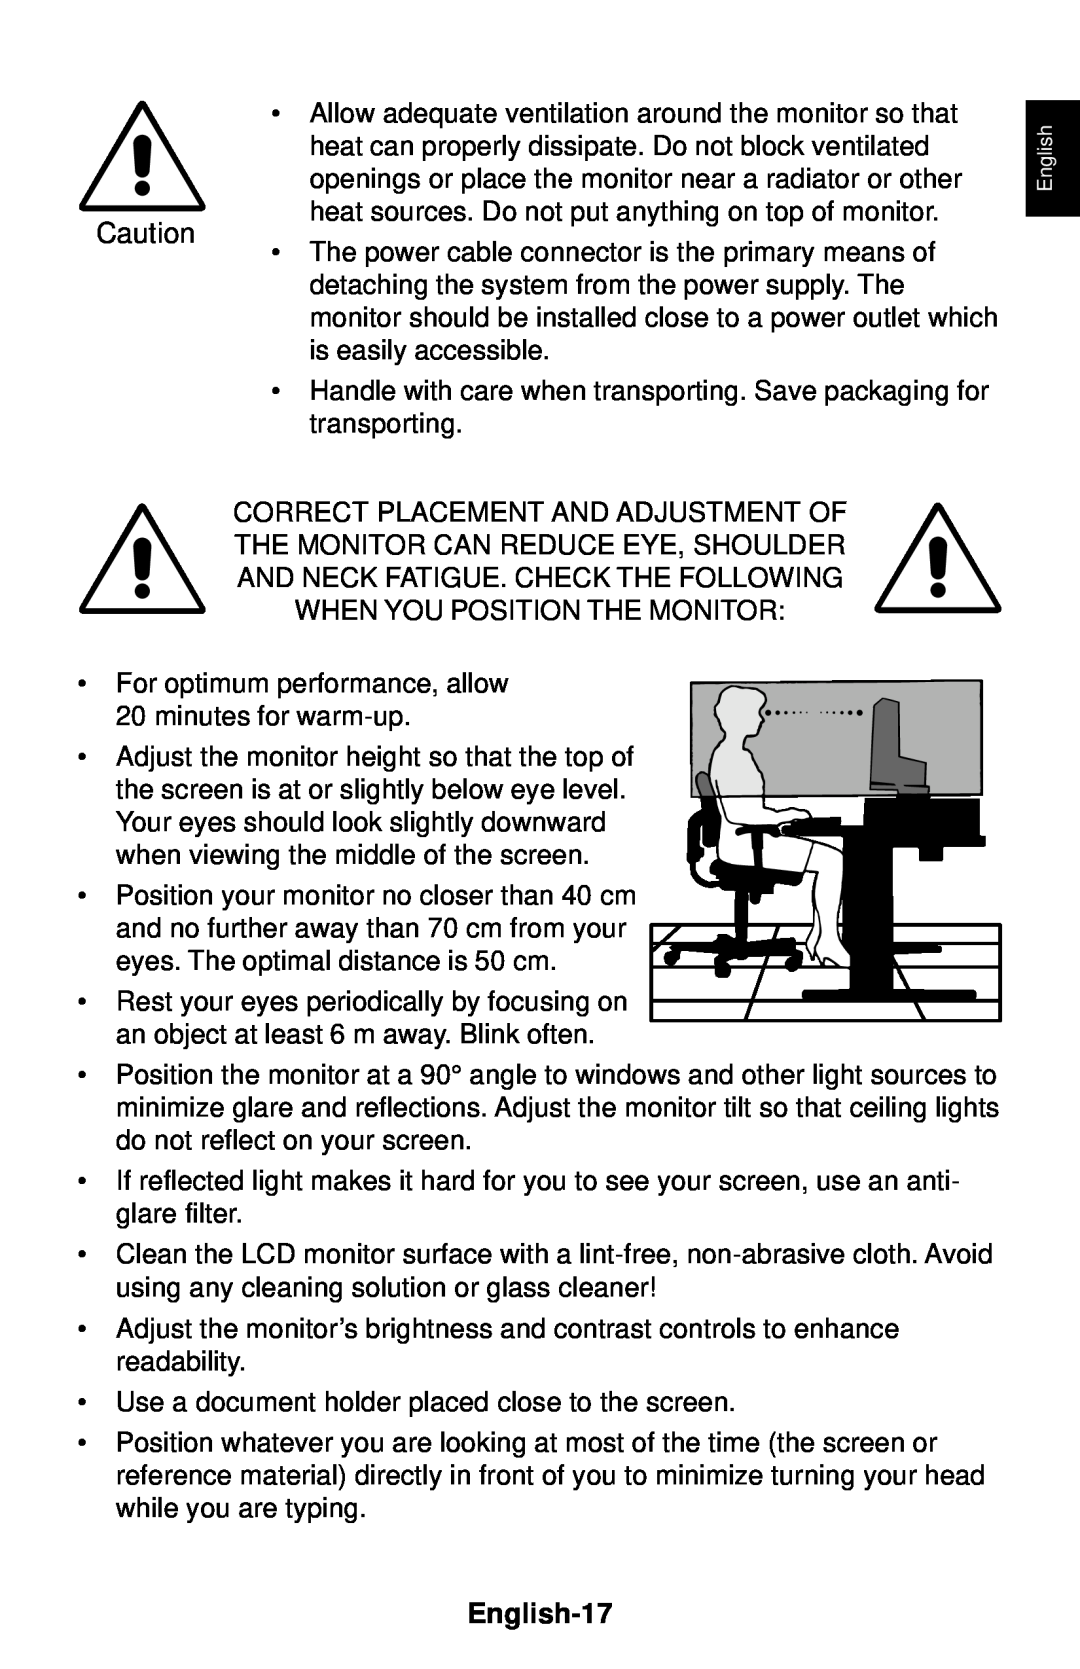 NEC LCD1830 user manual English-17 